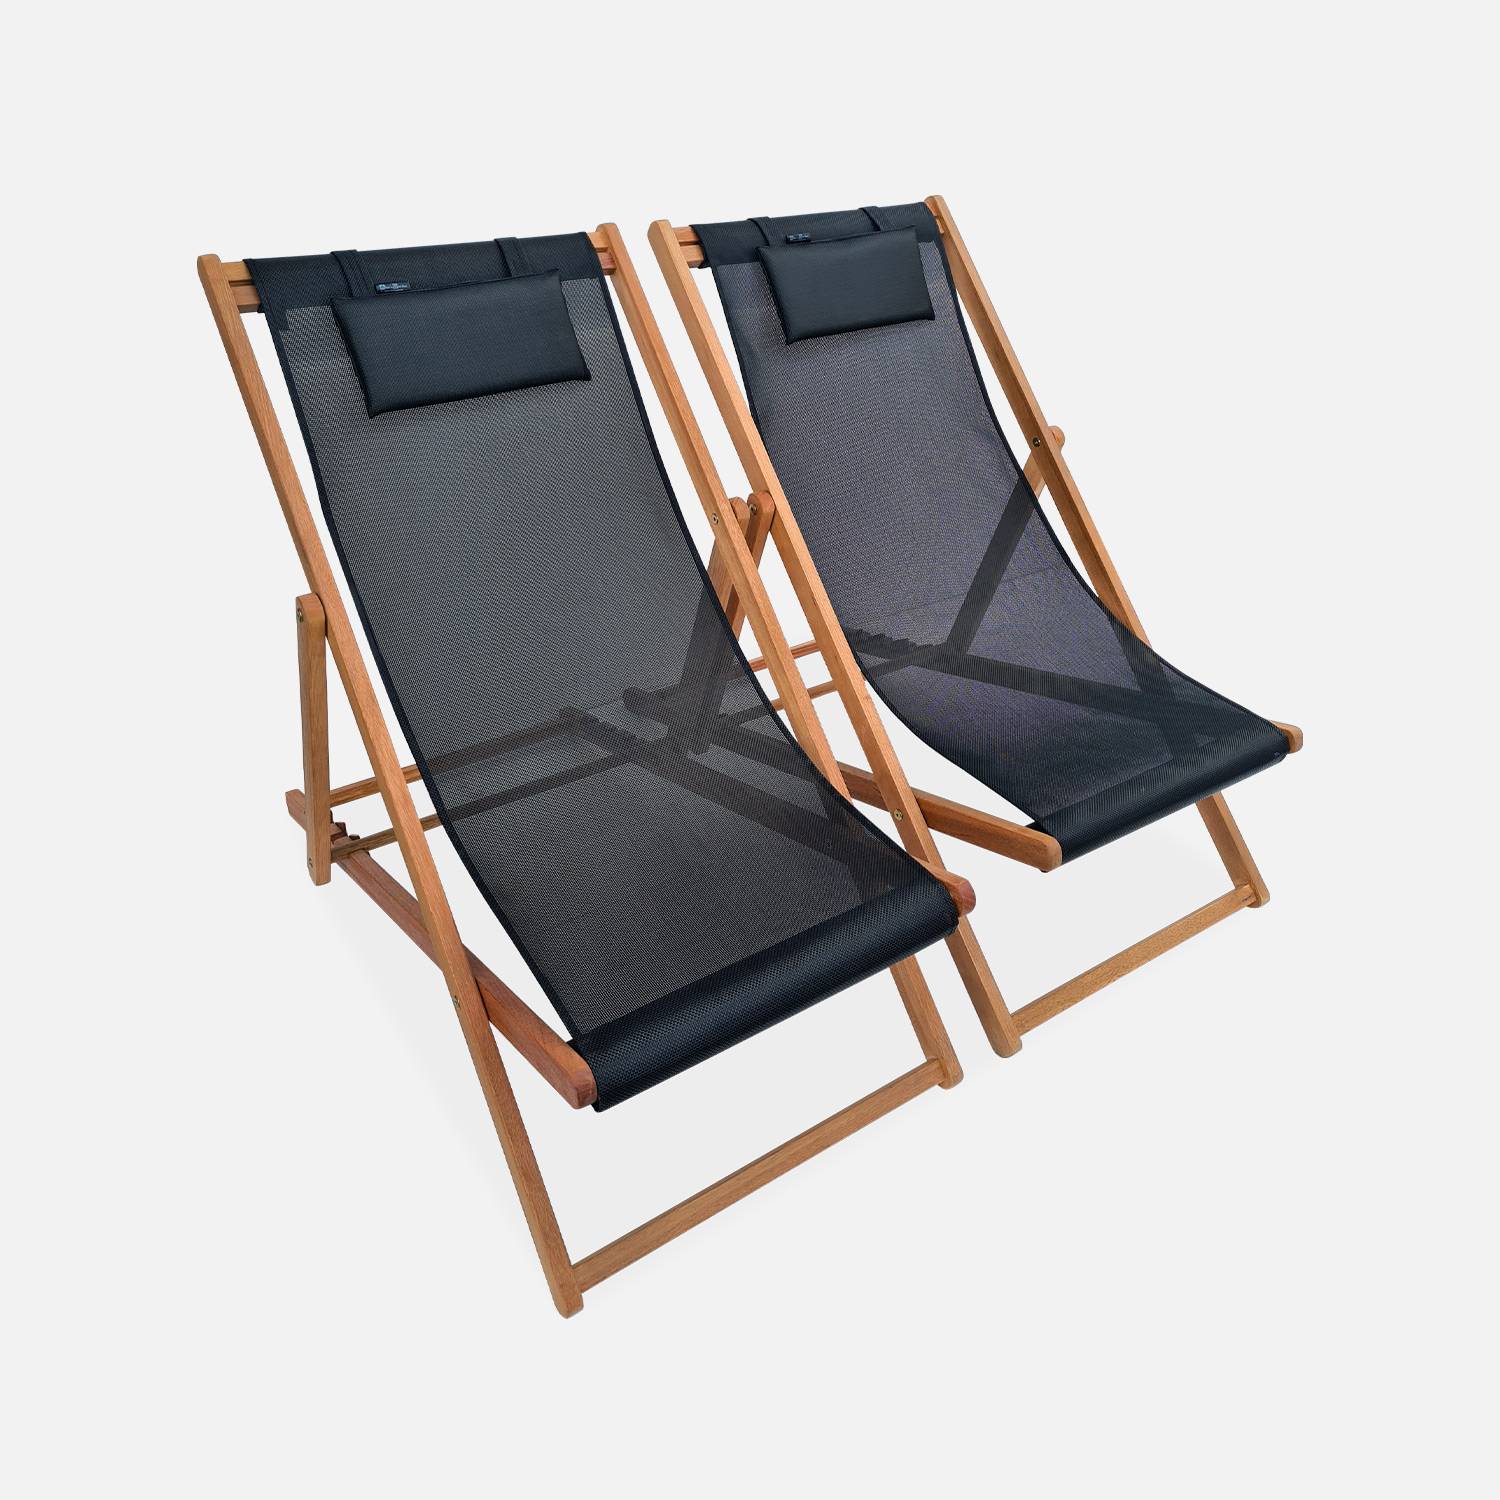 Pair of pre-oiled FSC eucalyptus deck chairs with headrest cushions - Creus - Wood/Black,sweeek,Photo2